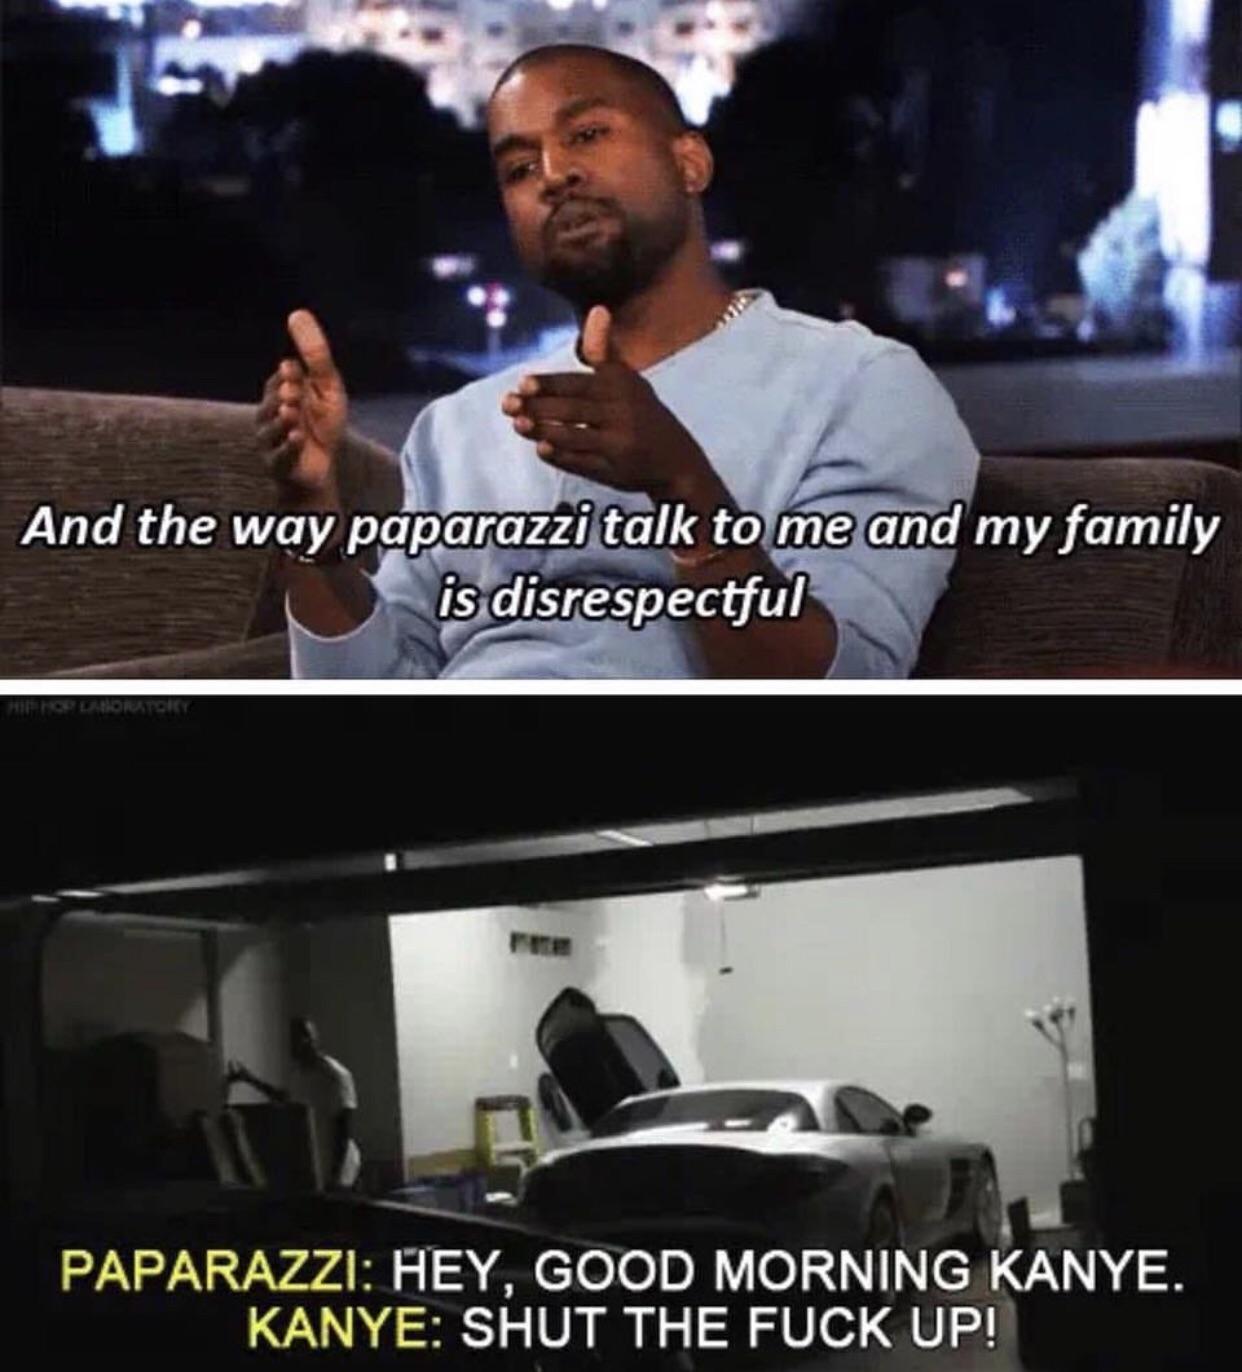 Good morning Kanye